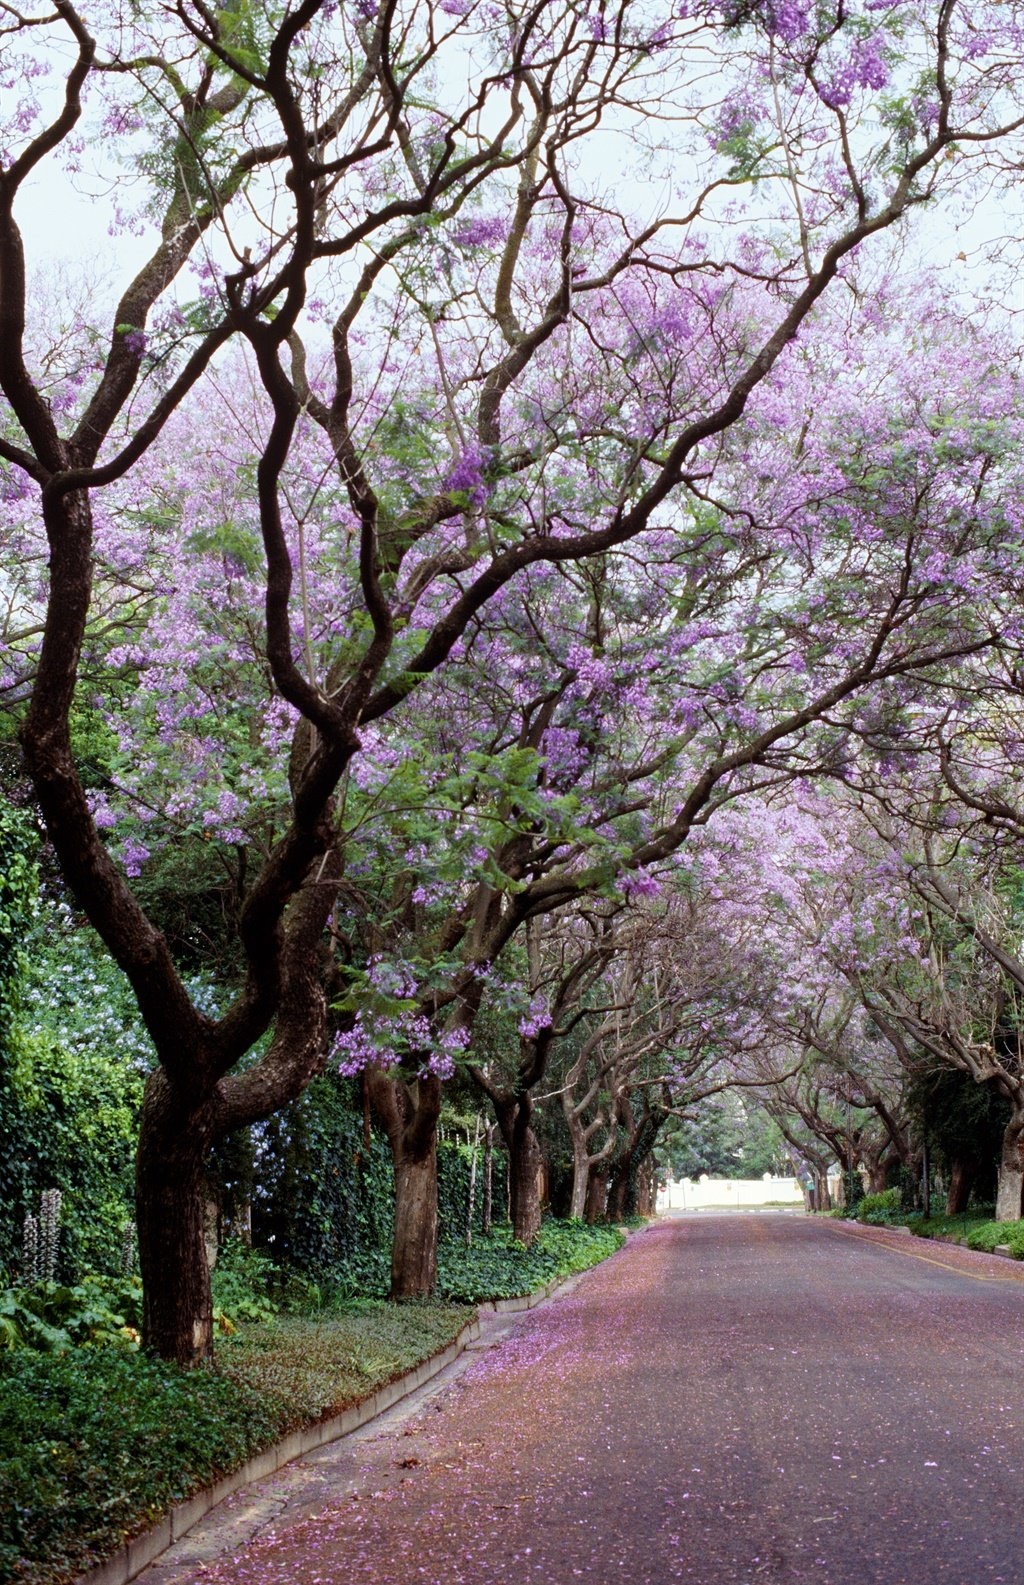 Herbert Baker Street for Jacaranda trees - Pretoria, South Africa